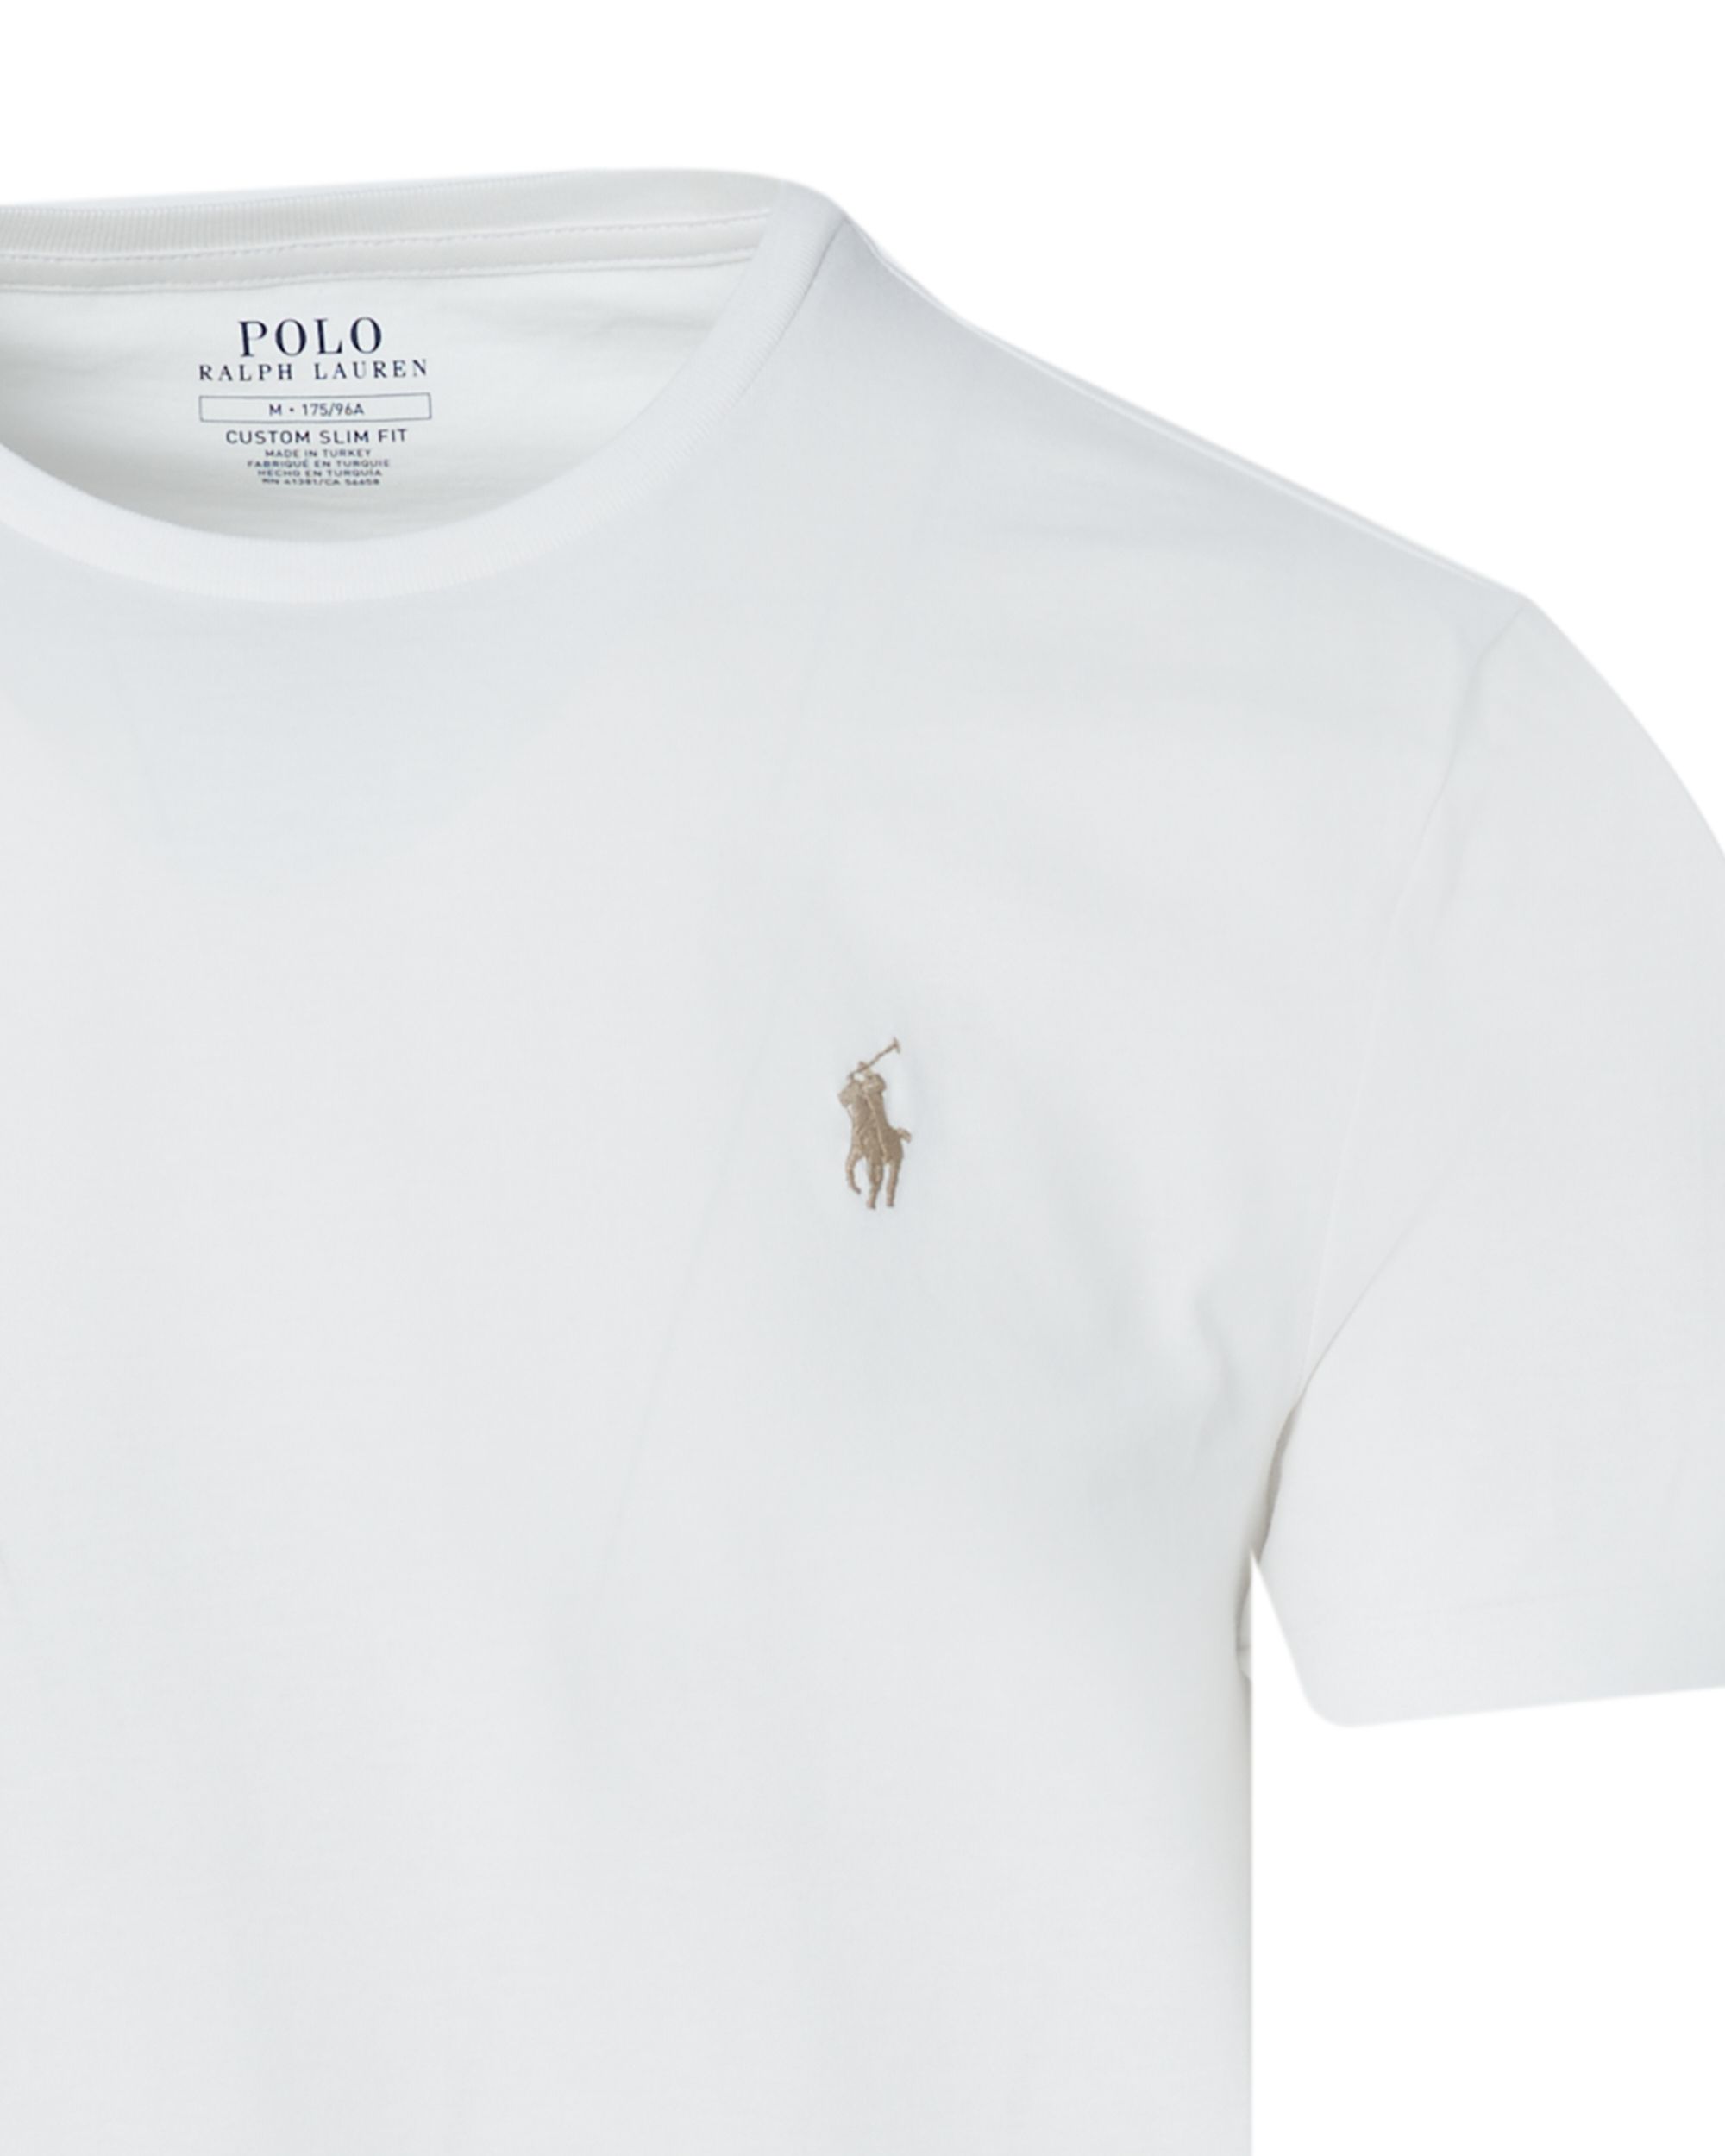 Polo Ralph Lauren T-shirt KM Wit 083431-001-L